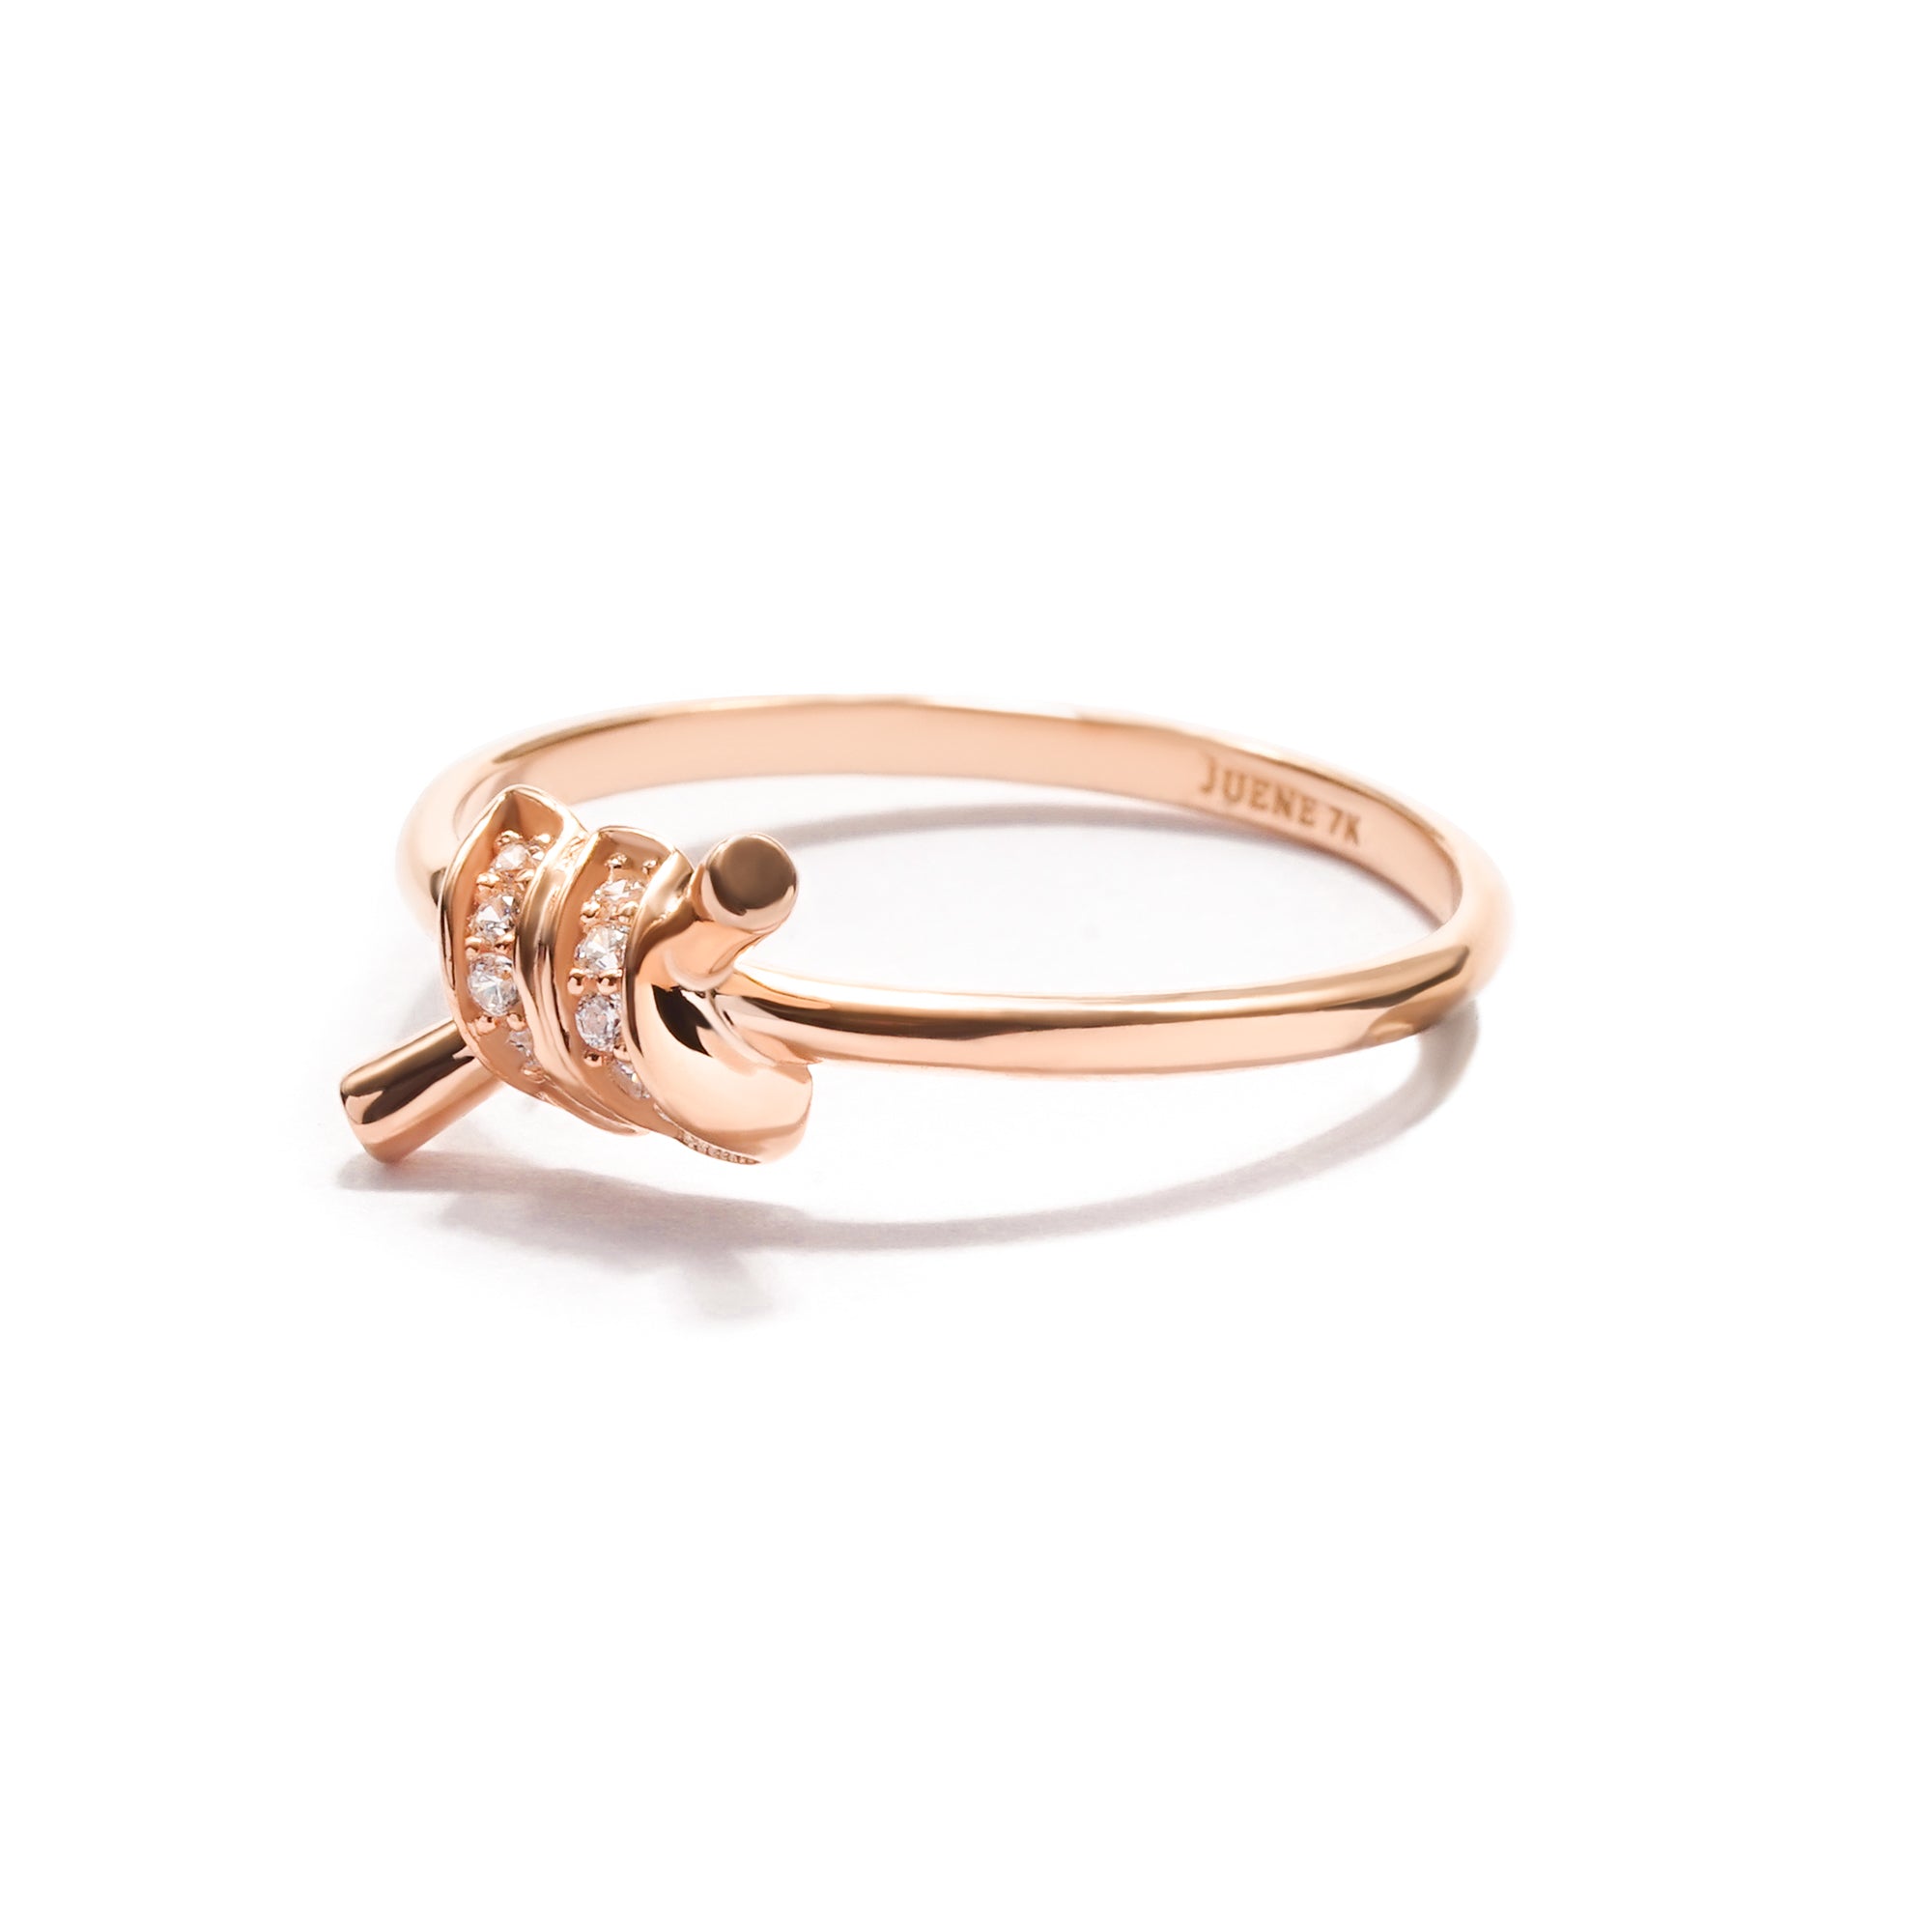 Lavita Gold Ring - Twine Collection - Juene Jewelry